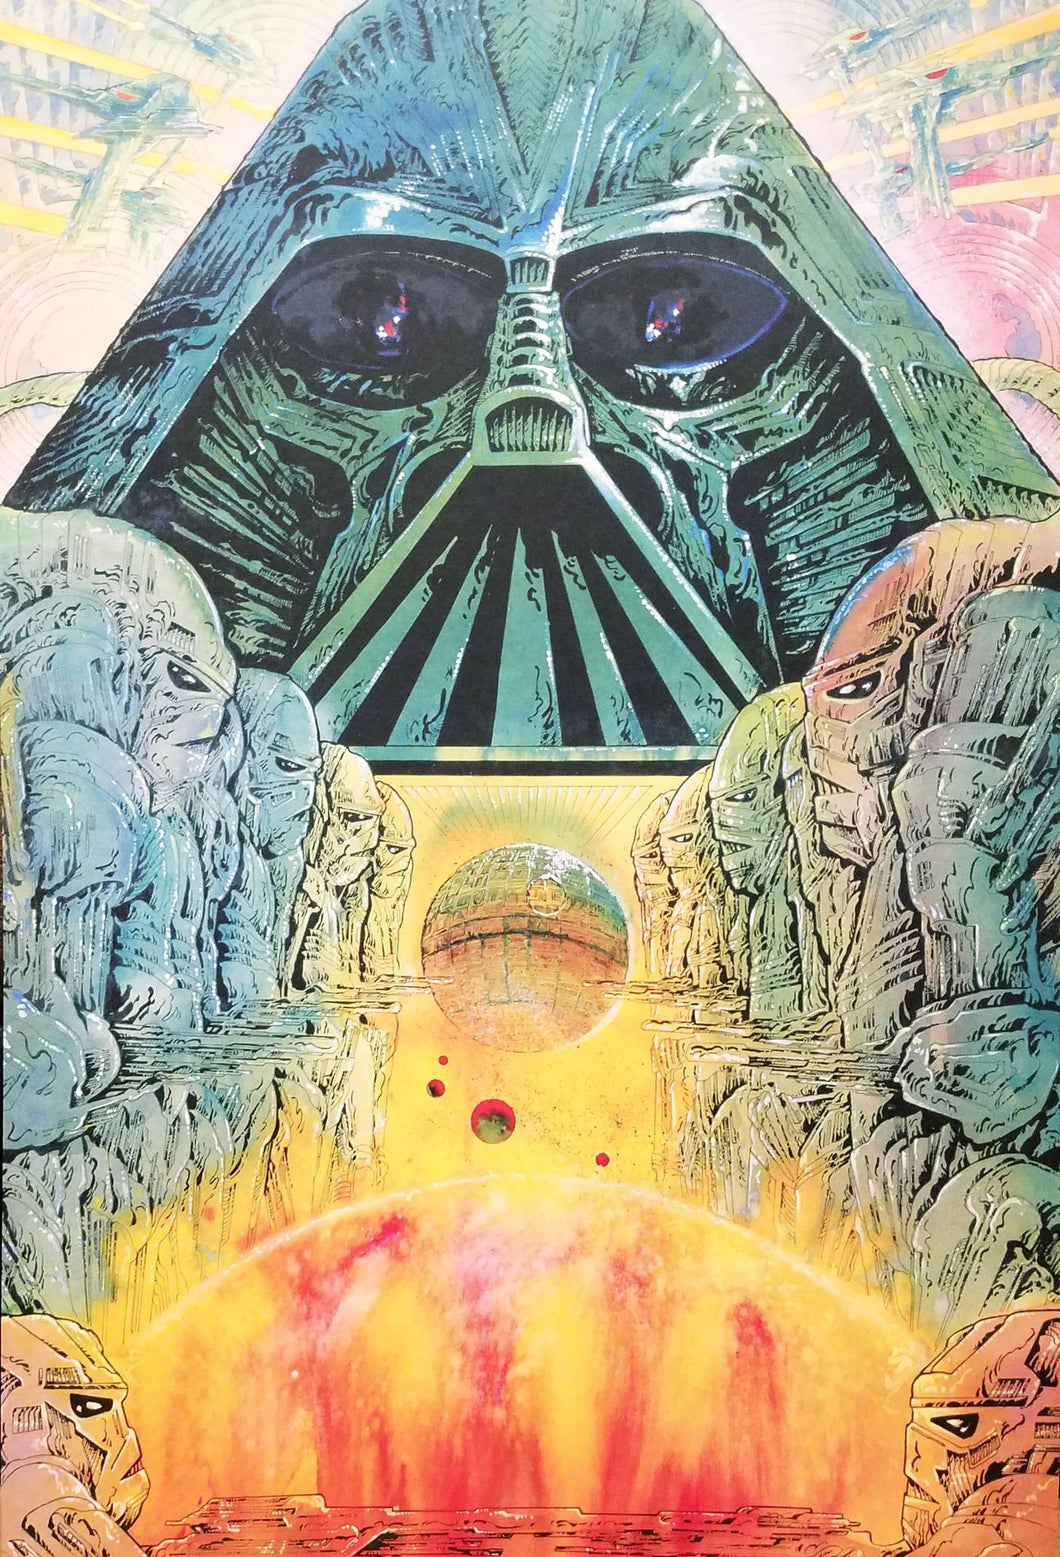 Star Wars Darth Vader 11x16 Art Poster Print by Philipee Druillet, 1977